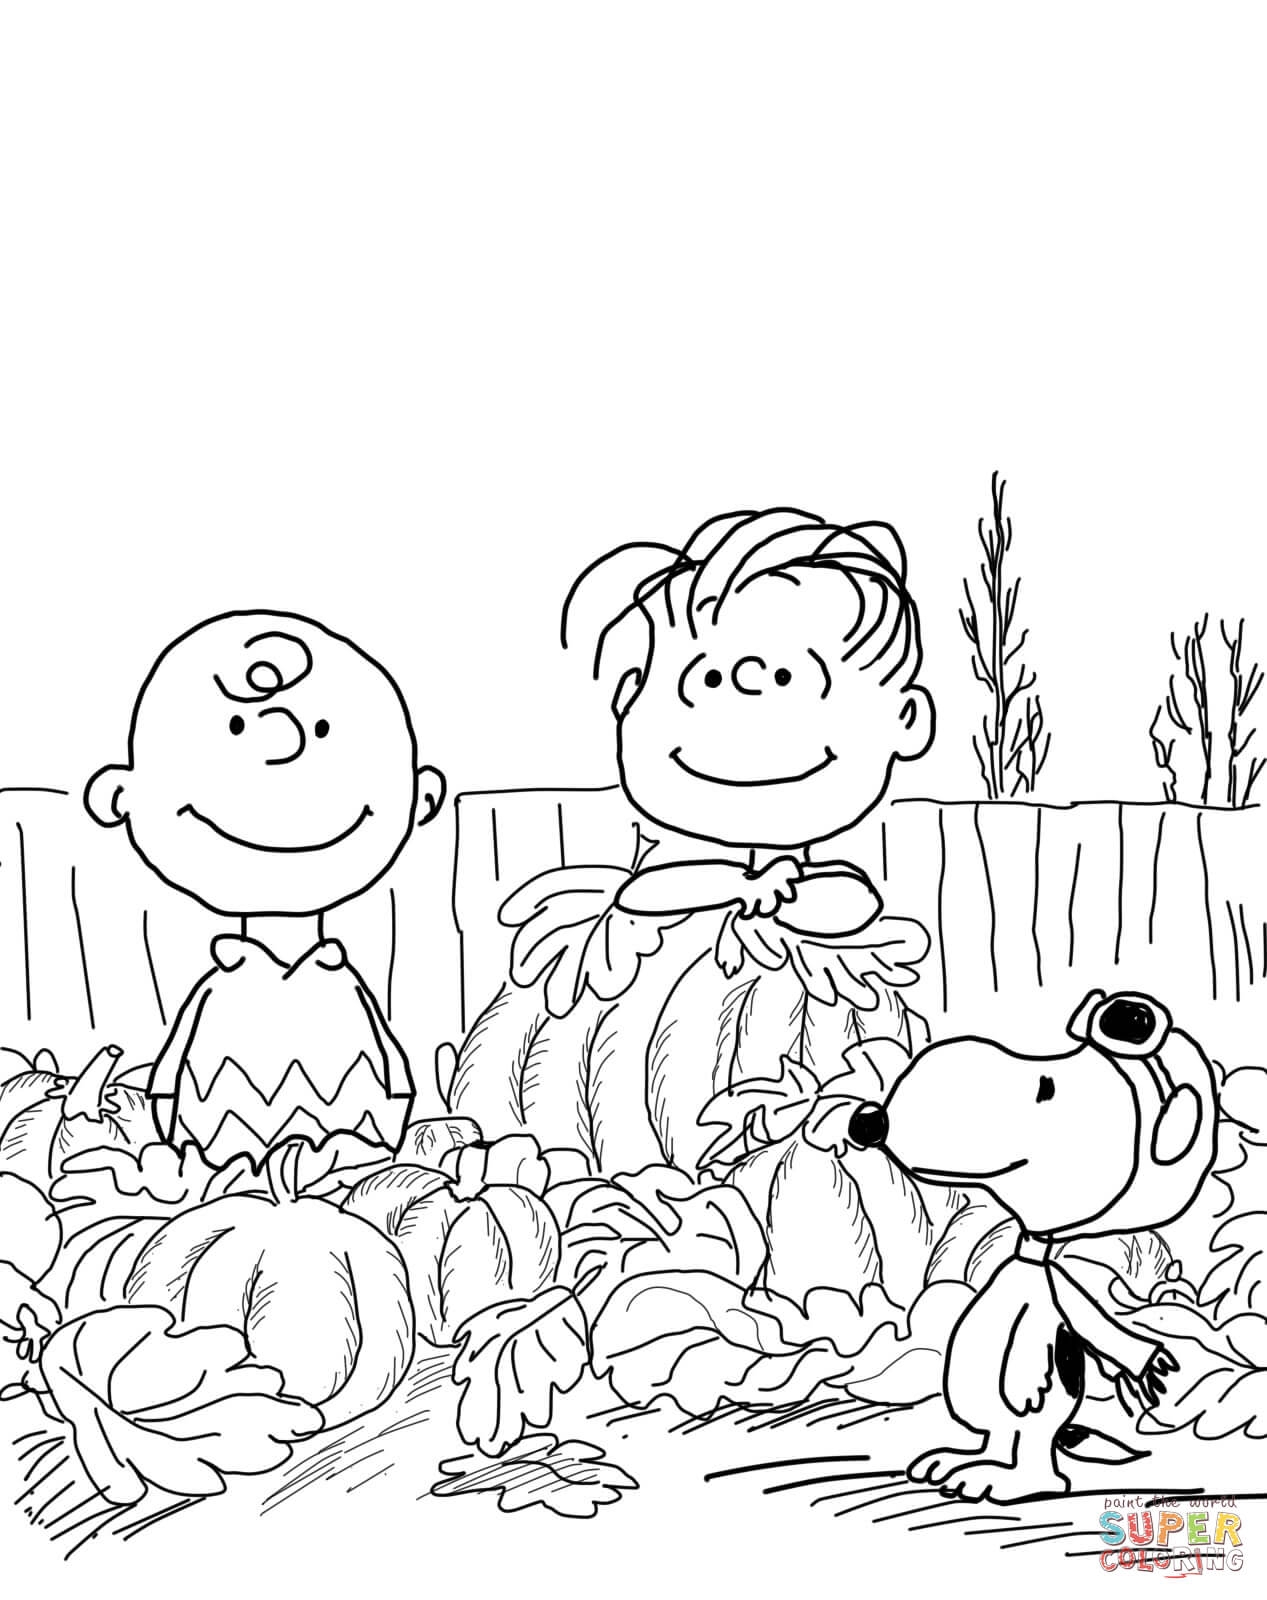 Great Pumpkin Charlie Brown Coloring Page Free Printable Coloring Pages - Free Printable Charlie Brown Halloween Coloring Pages